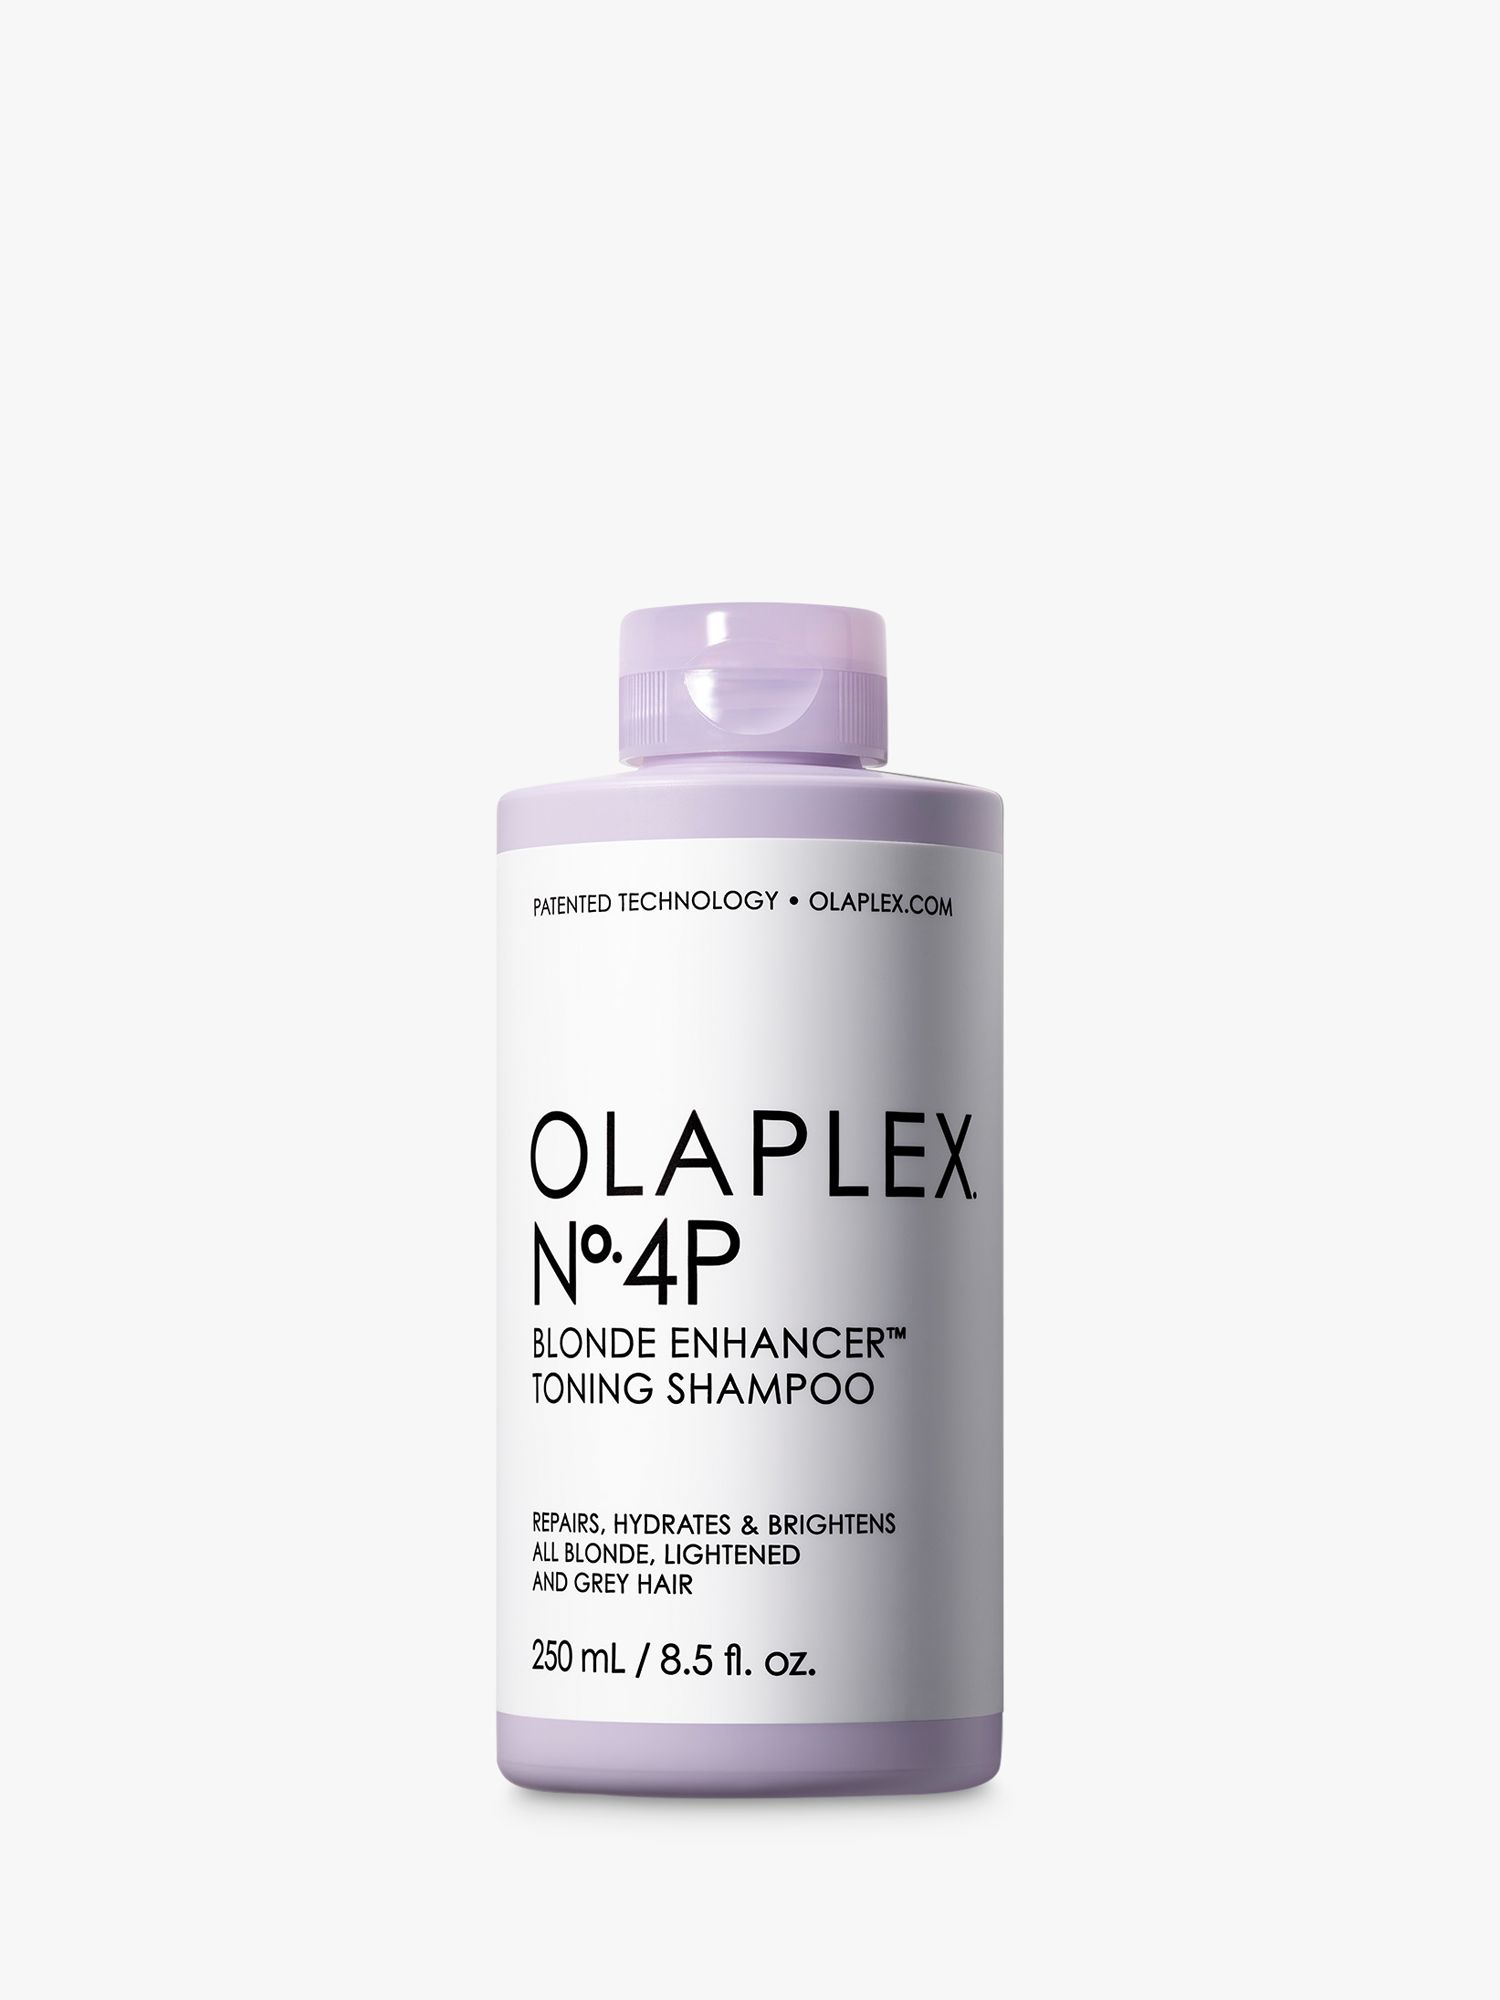 Olaplex No.4P Blonde Enhancer Toning Shampoo, at John Lewis & Partners